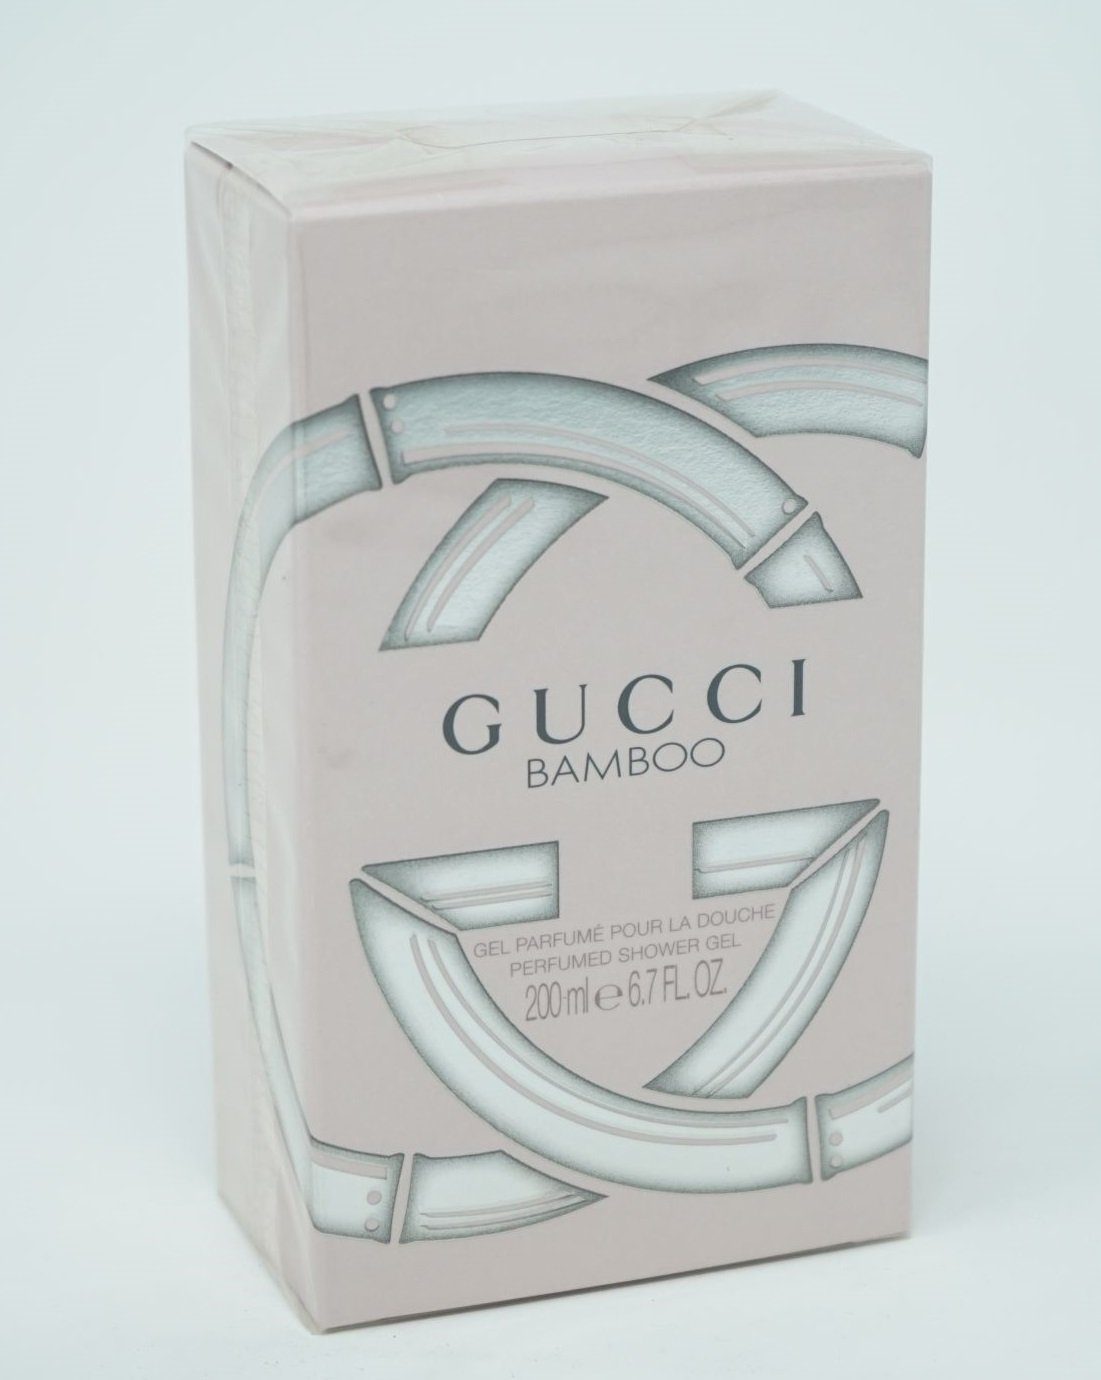 200ml Gel Duschgel Bamboo Shower Gucci GUCCI Perfumed